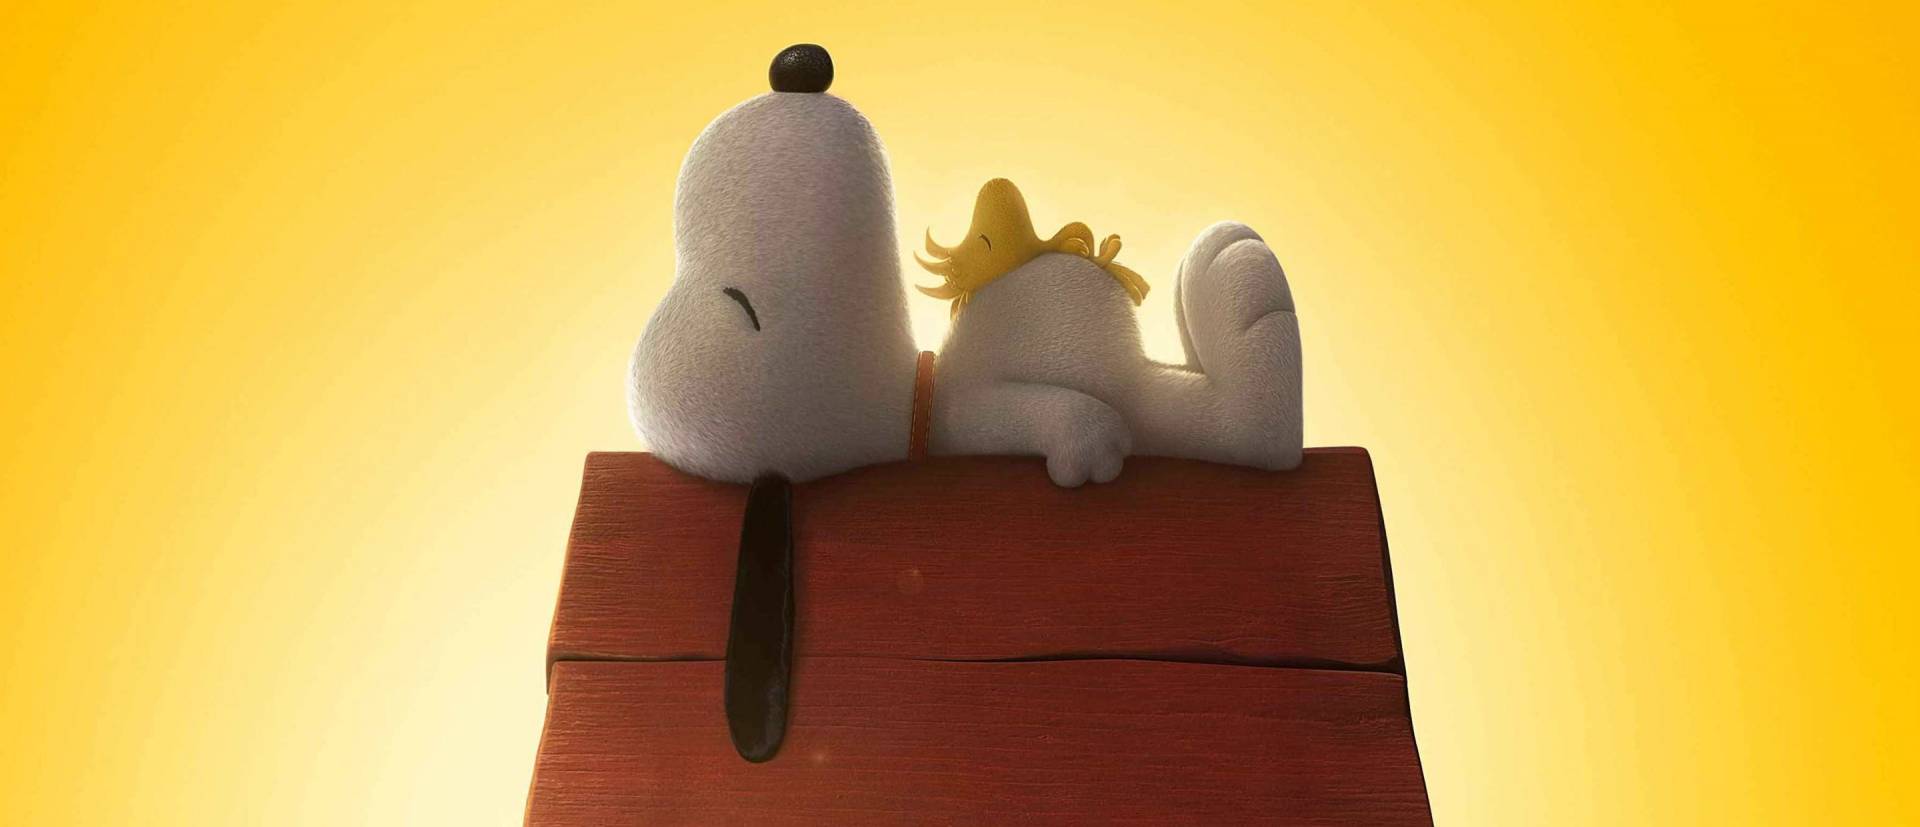 Snoopy nagy kalandja, alias a Peanuts film!